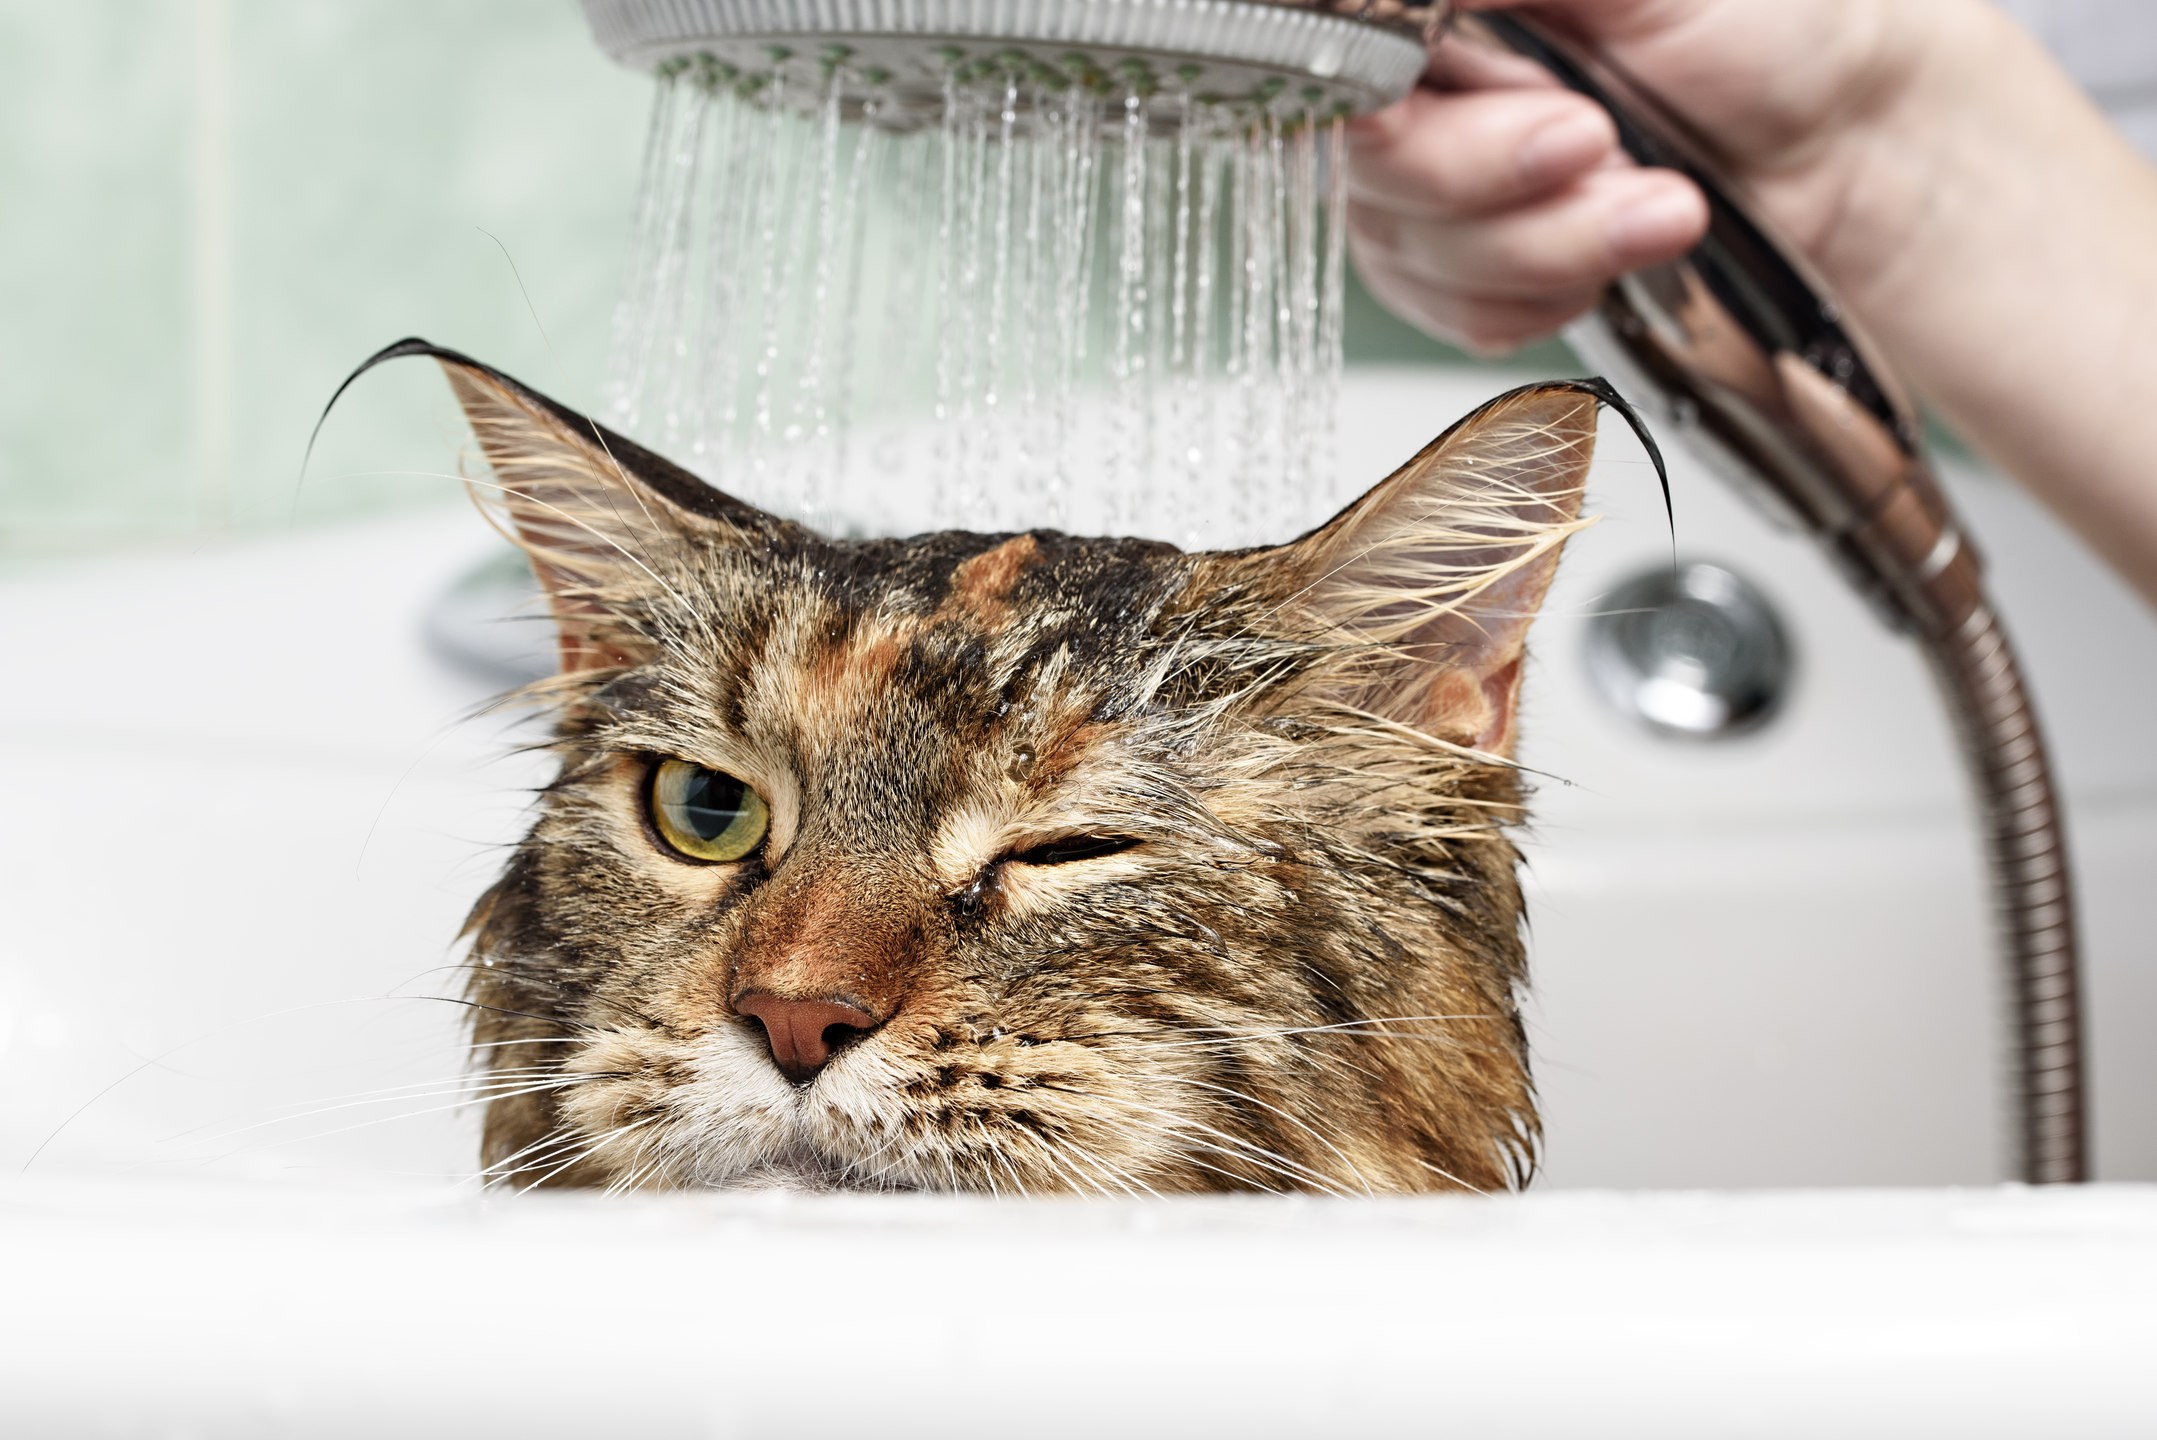 Мытье кошки